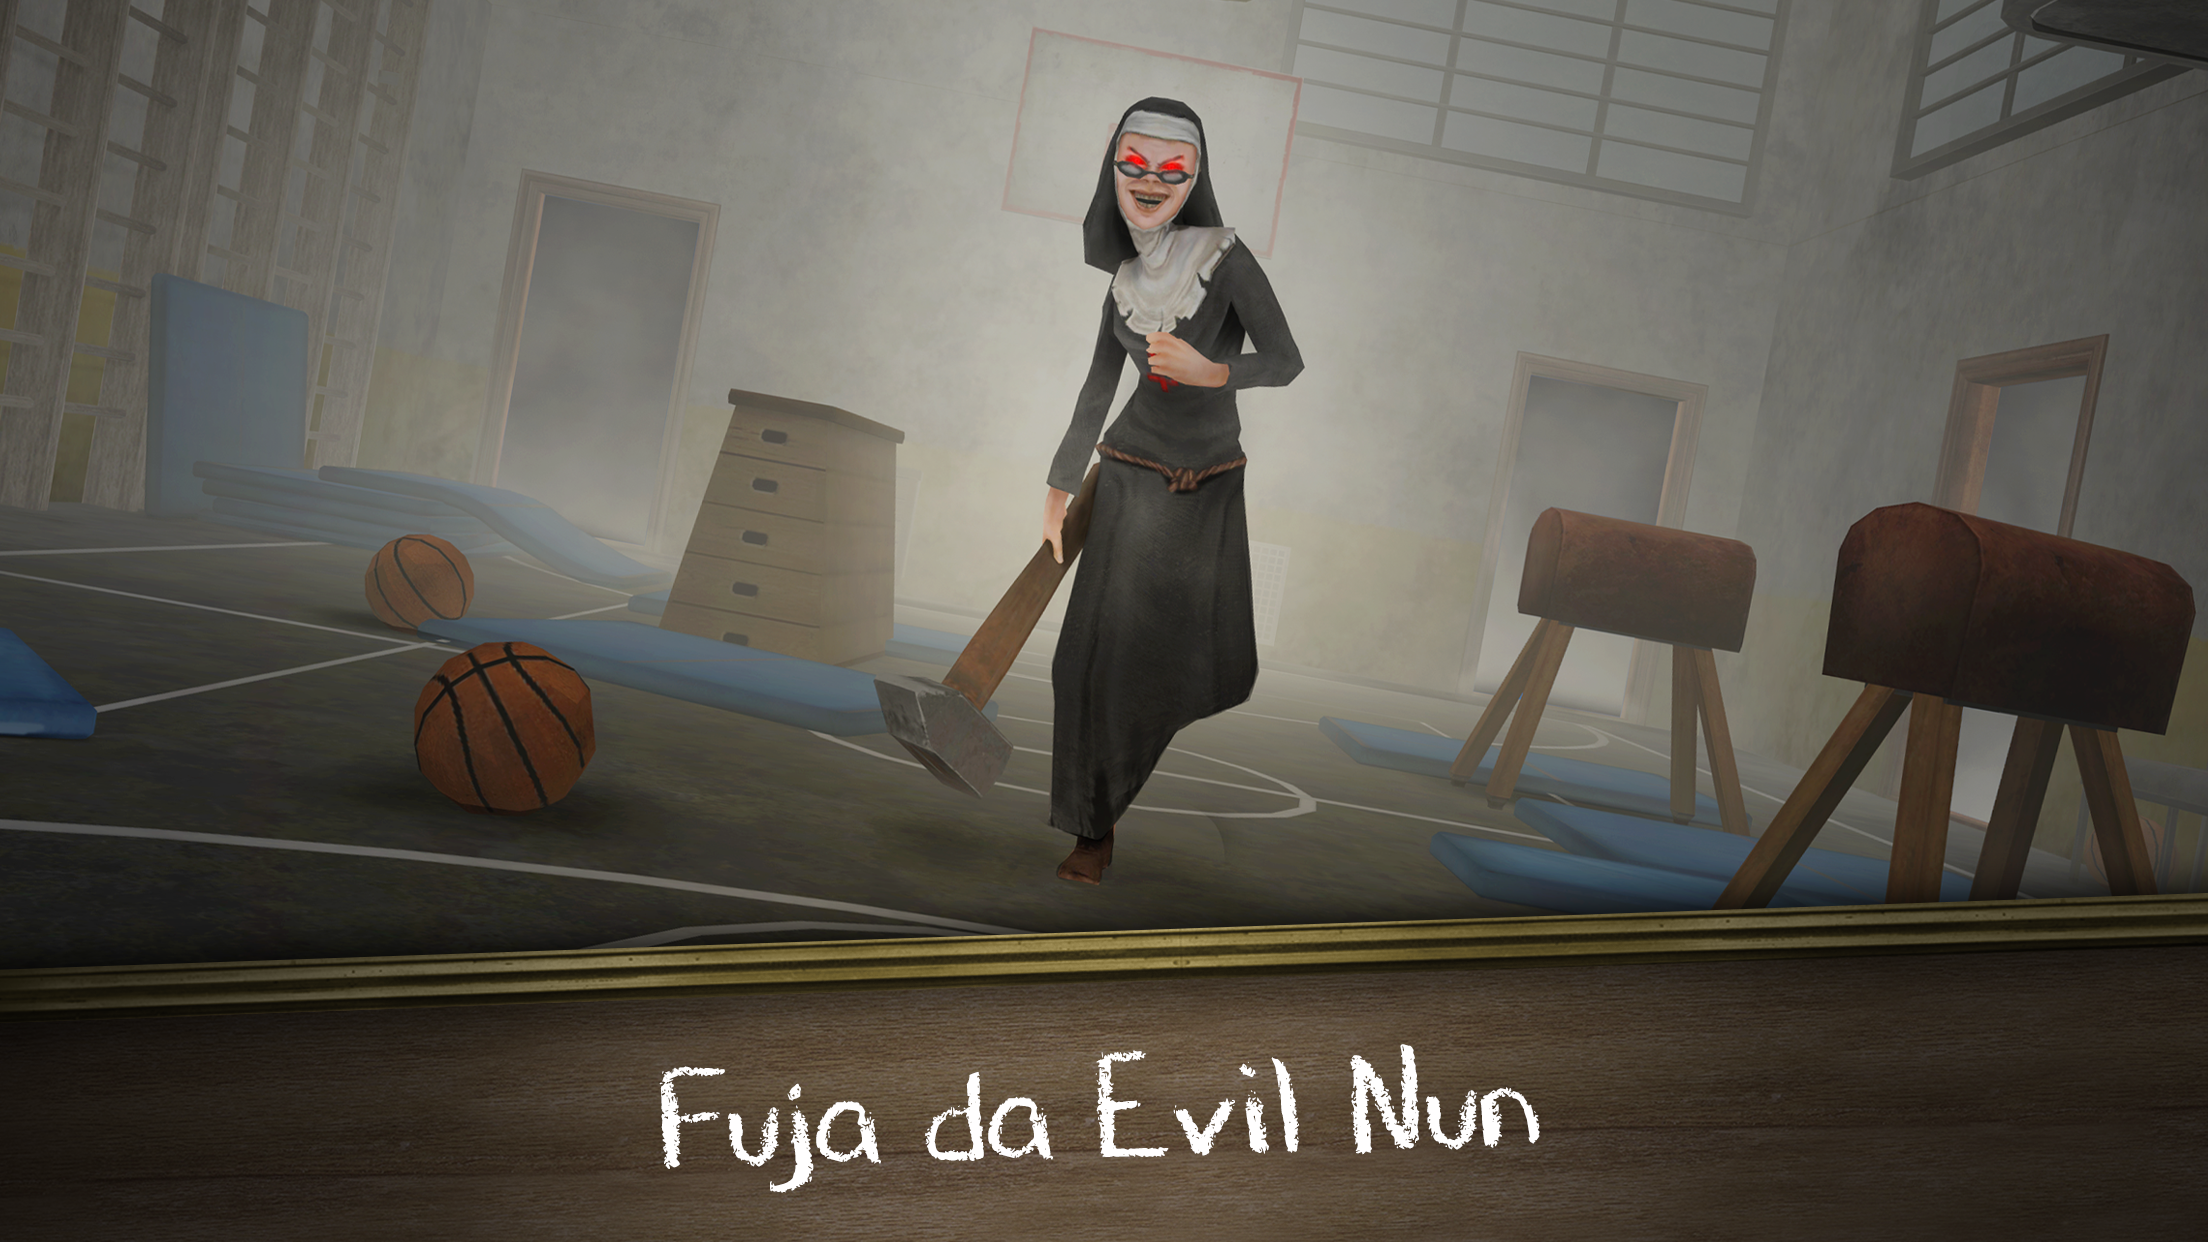 Screenshot 1 of Evil Nun Rush 1.0.7